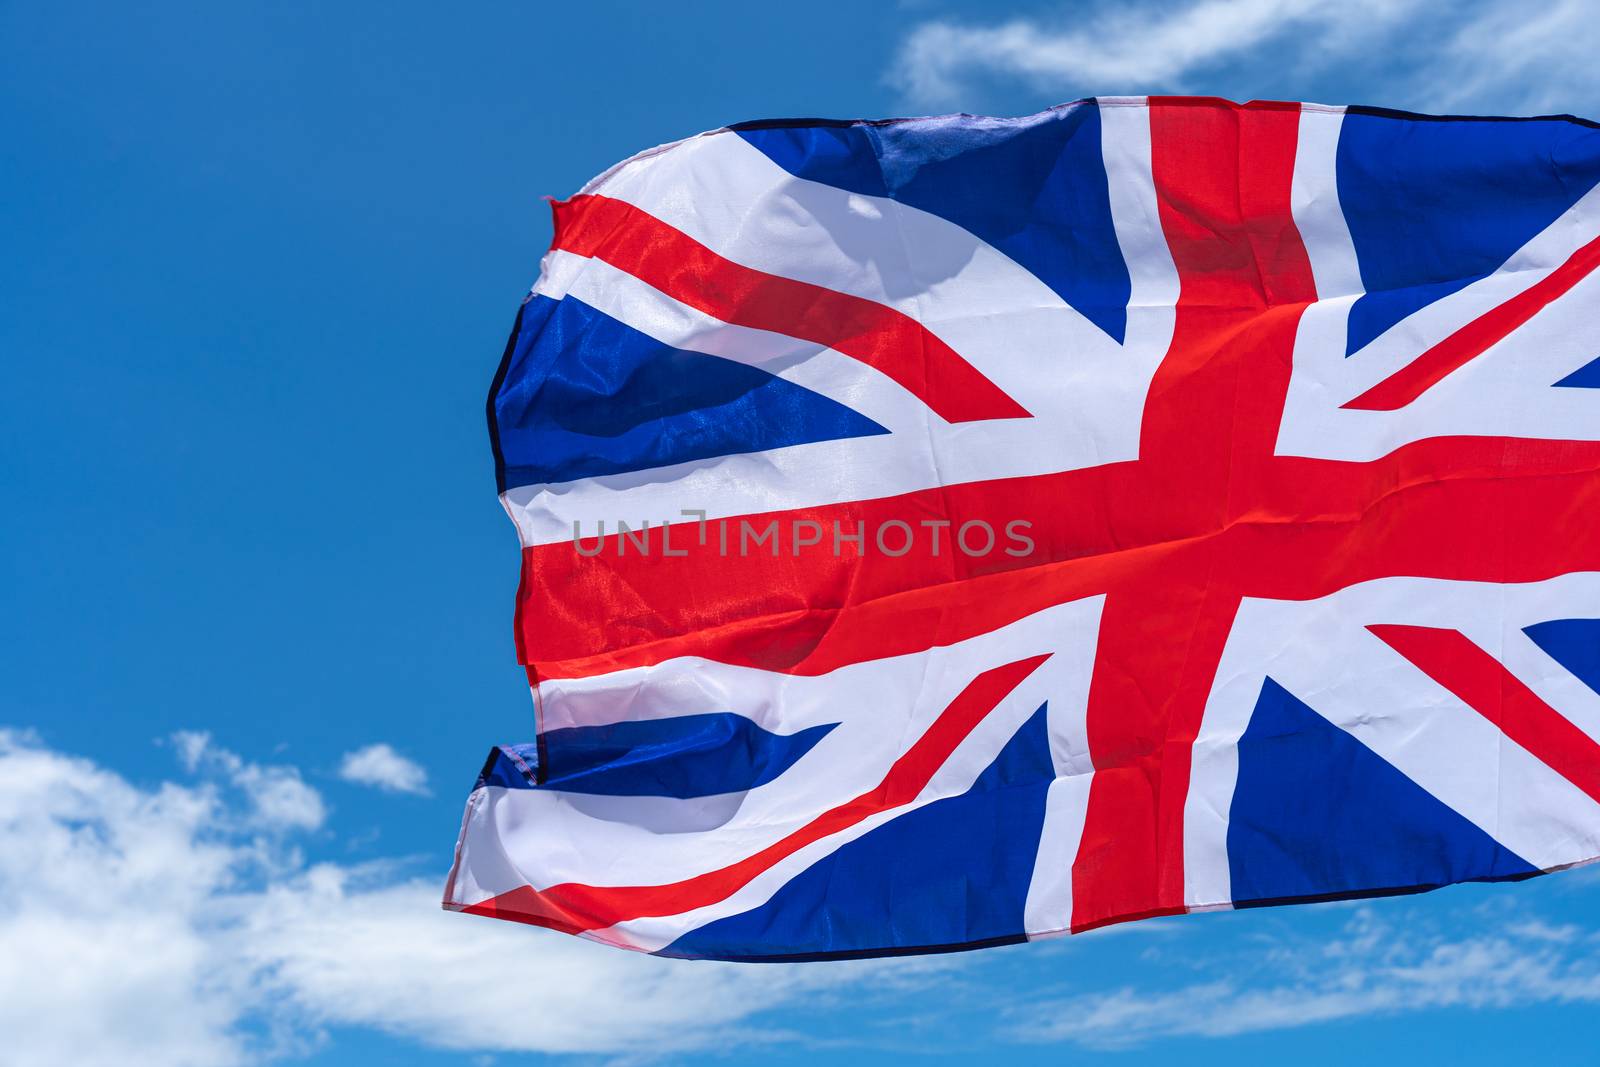 Waving UK flag under blue sky background.